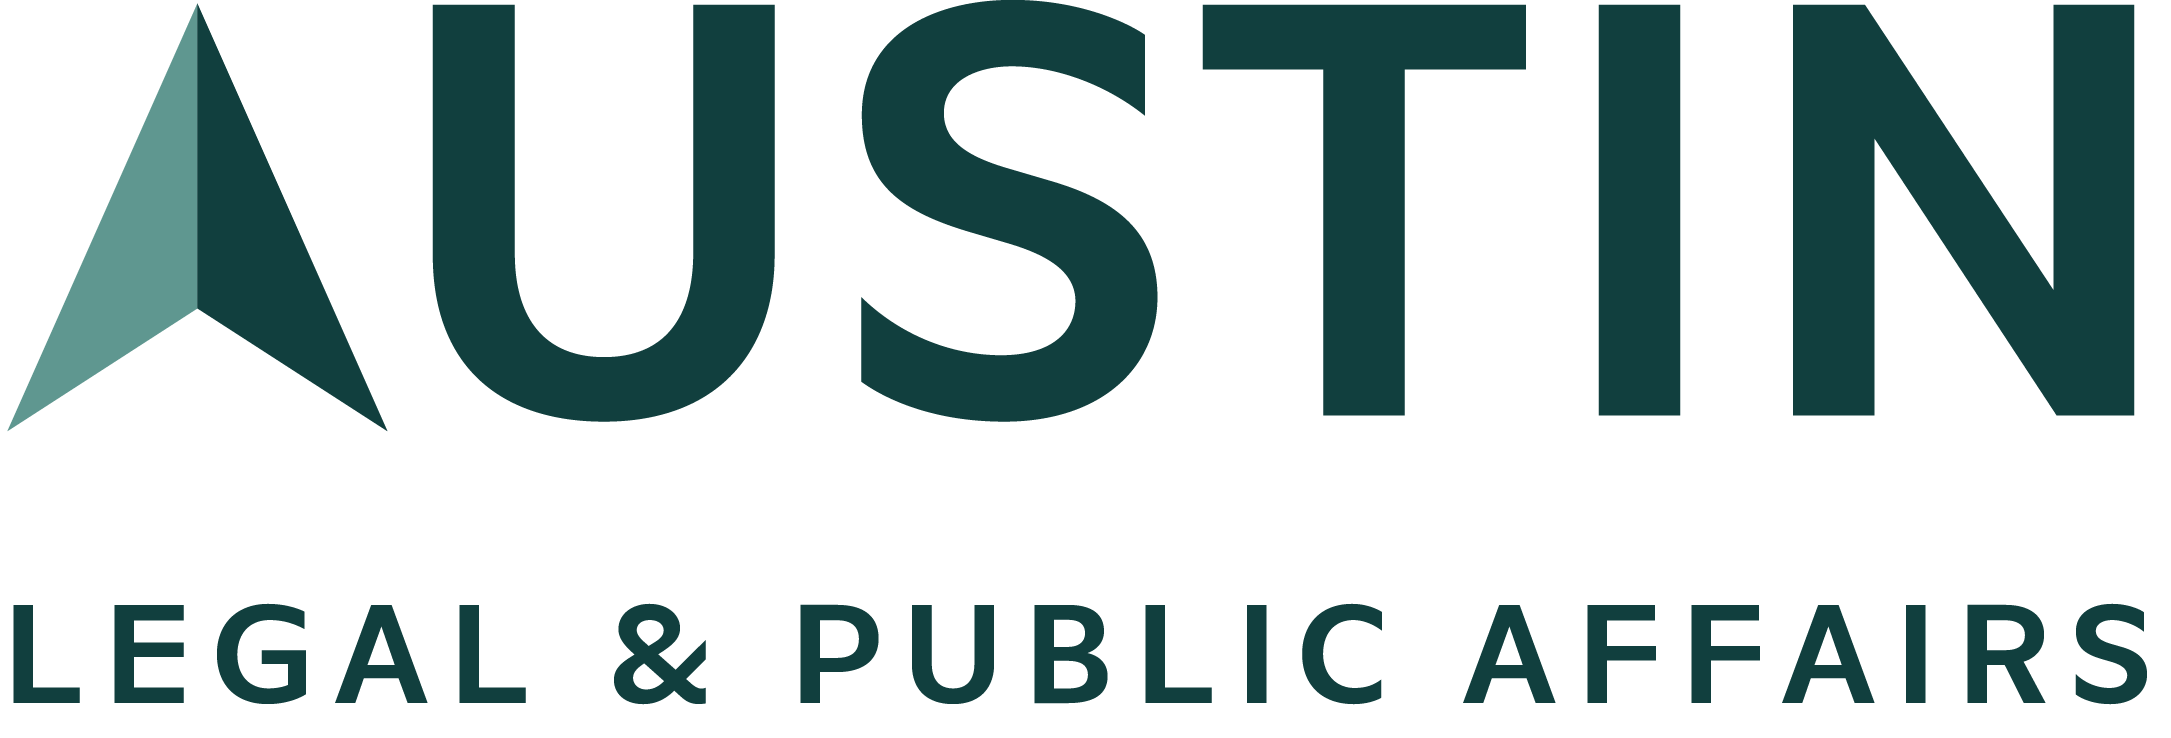 Austin Legal & Public Affairs